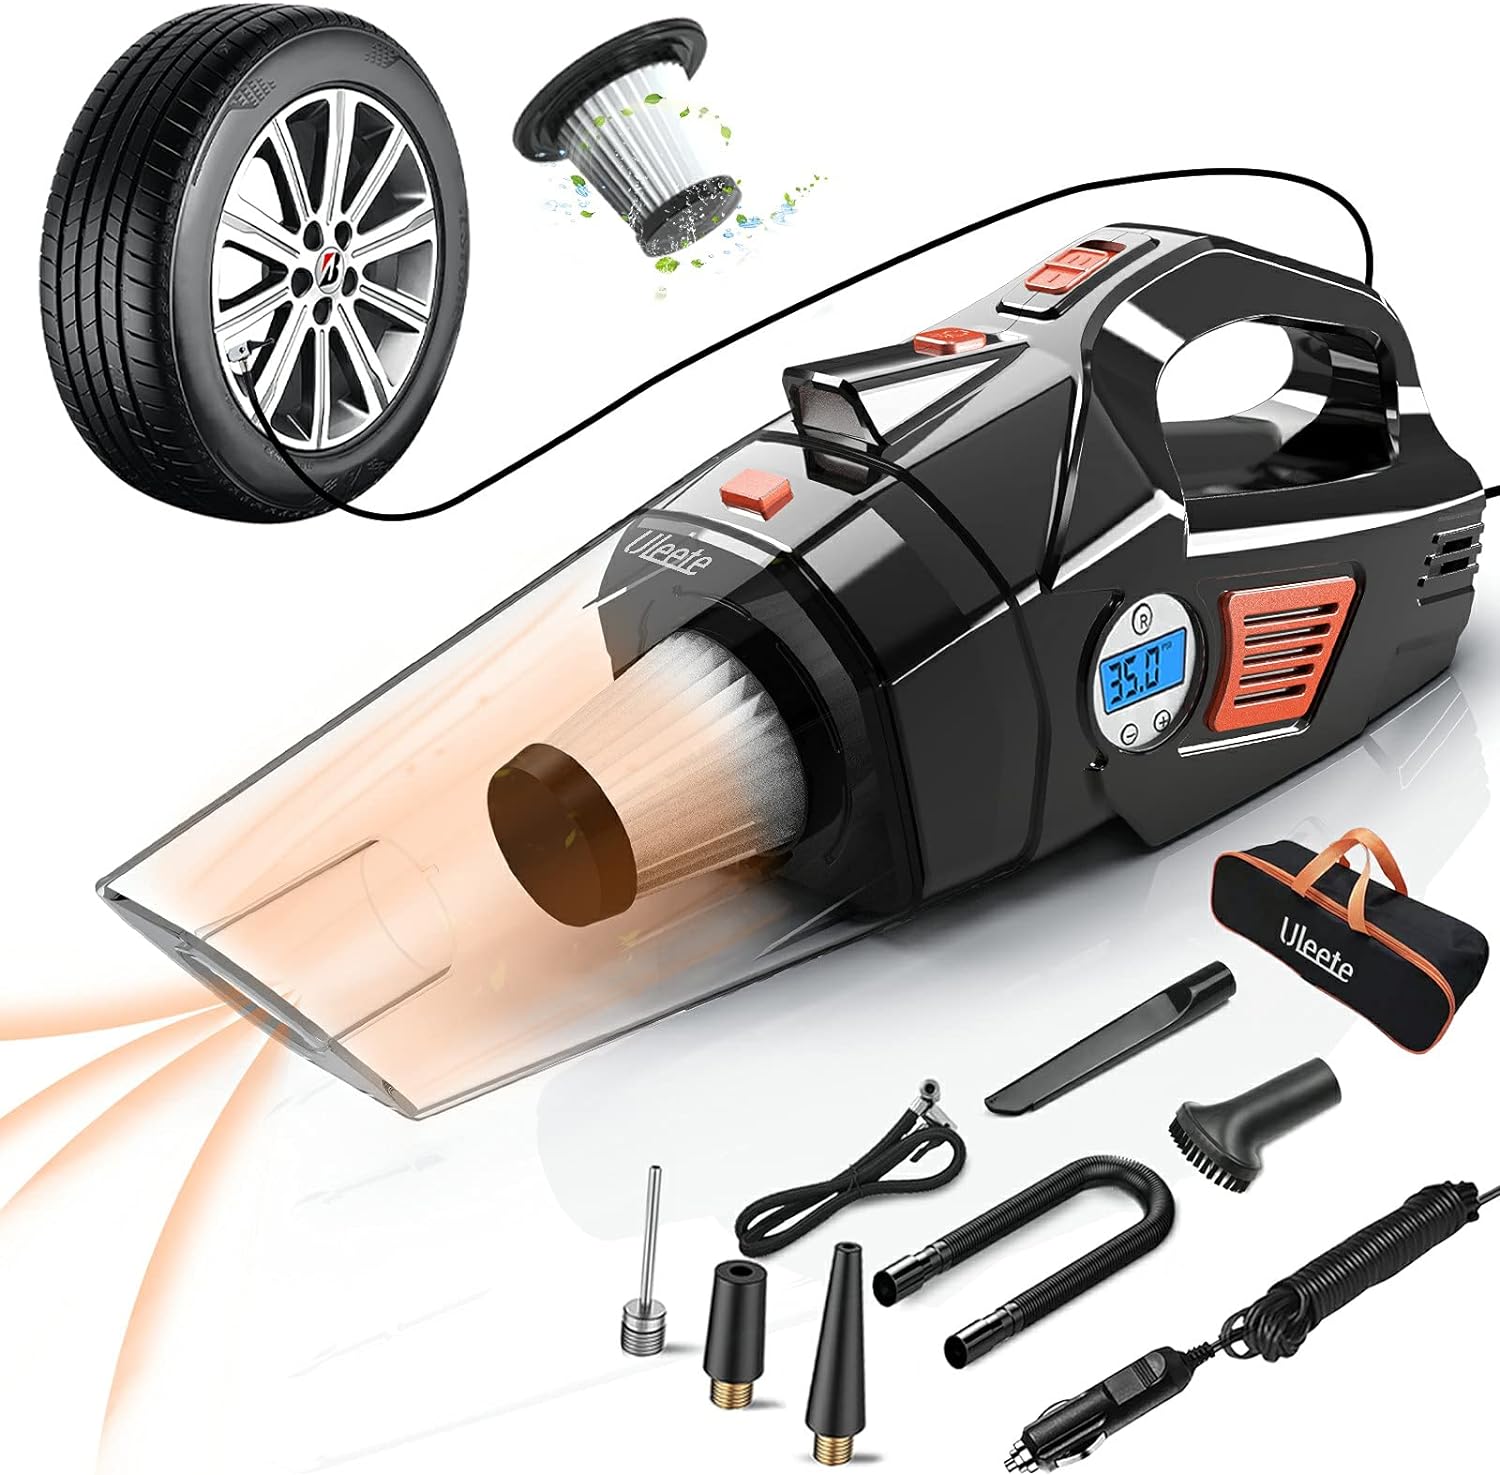 Uleete 4 in 1 Portable Car Vacuum Cleaner, Digital Air Compressor Tire Inflator for Car Tires, High Power Corded Handheld Vacuu